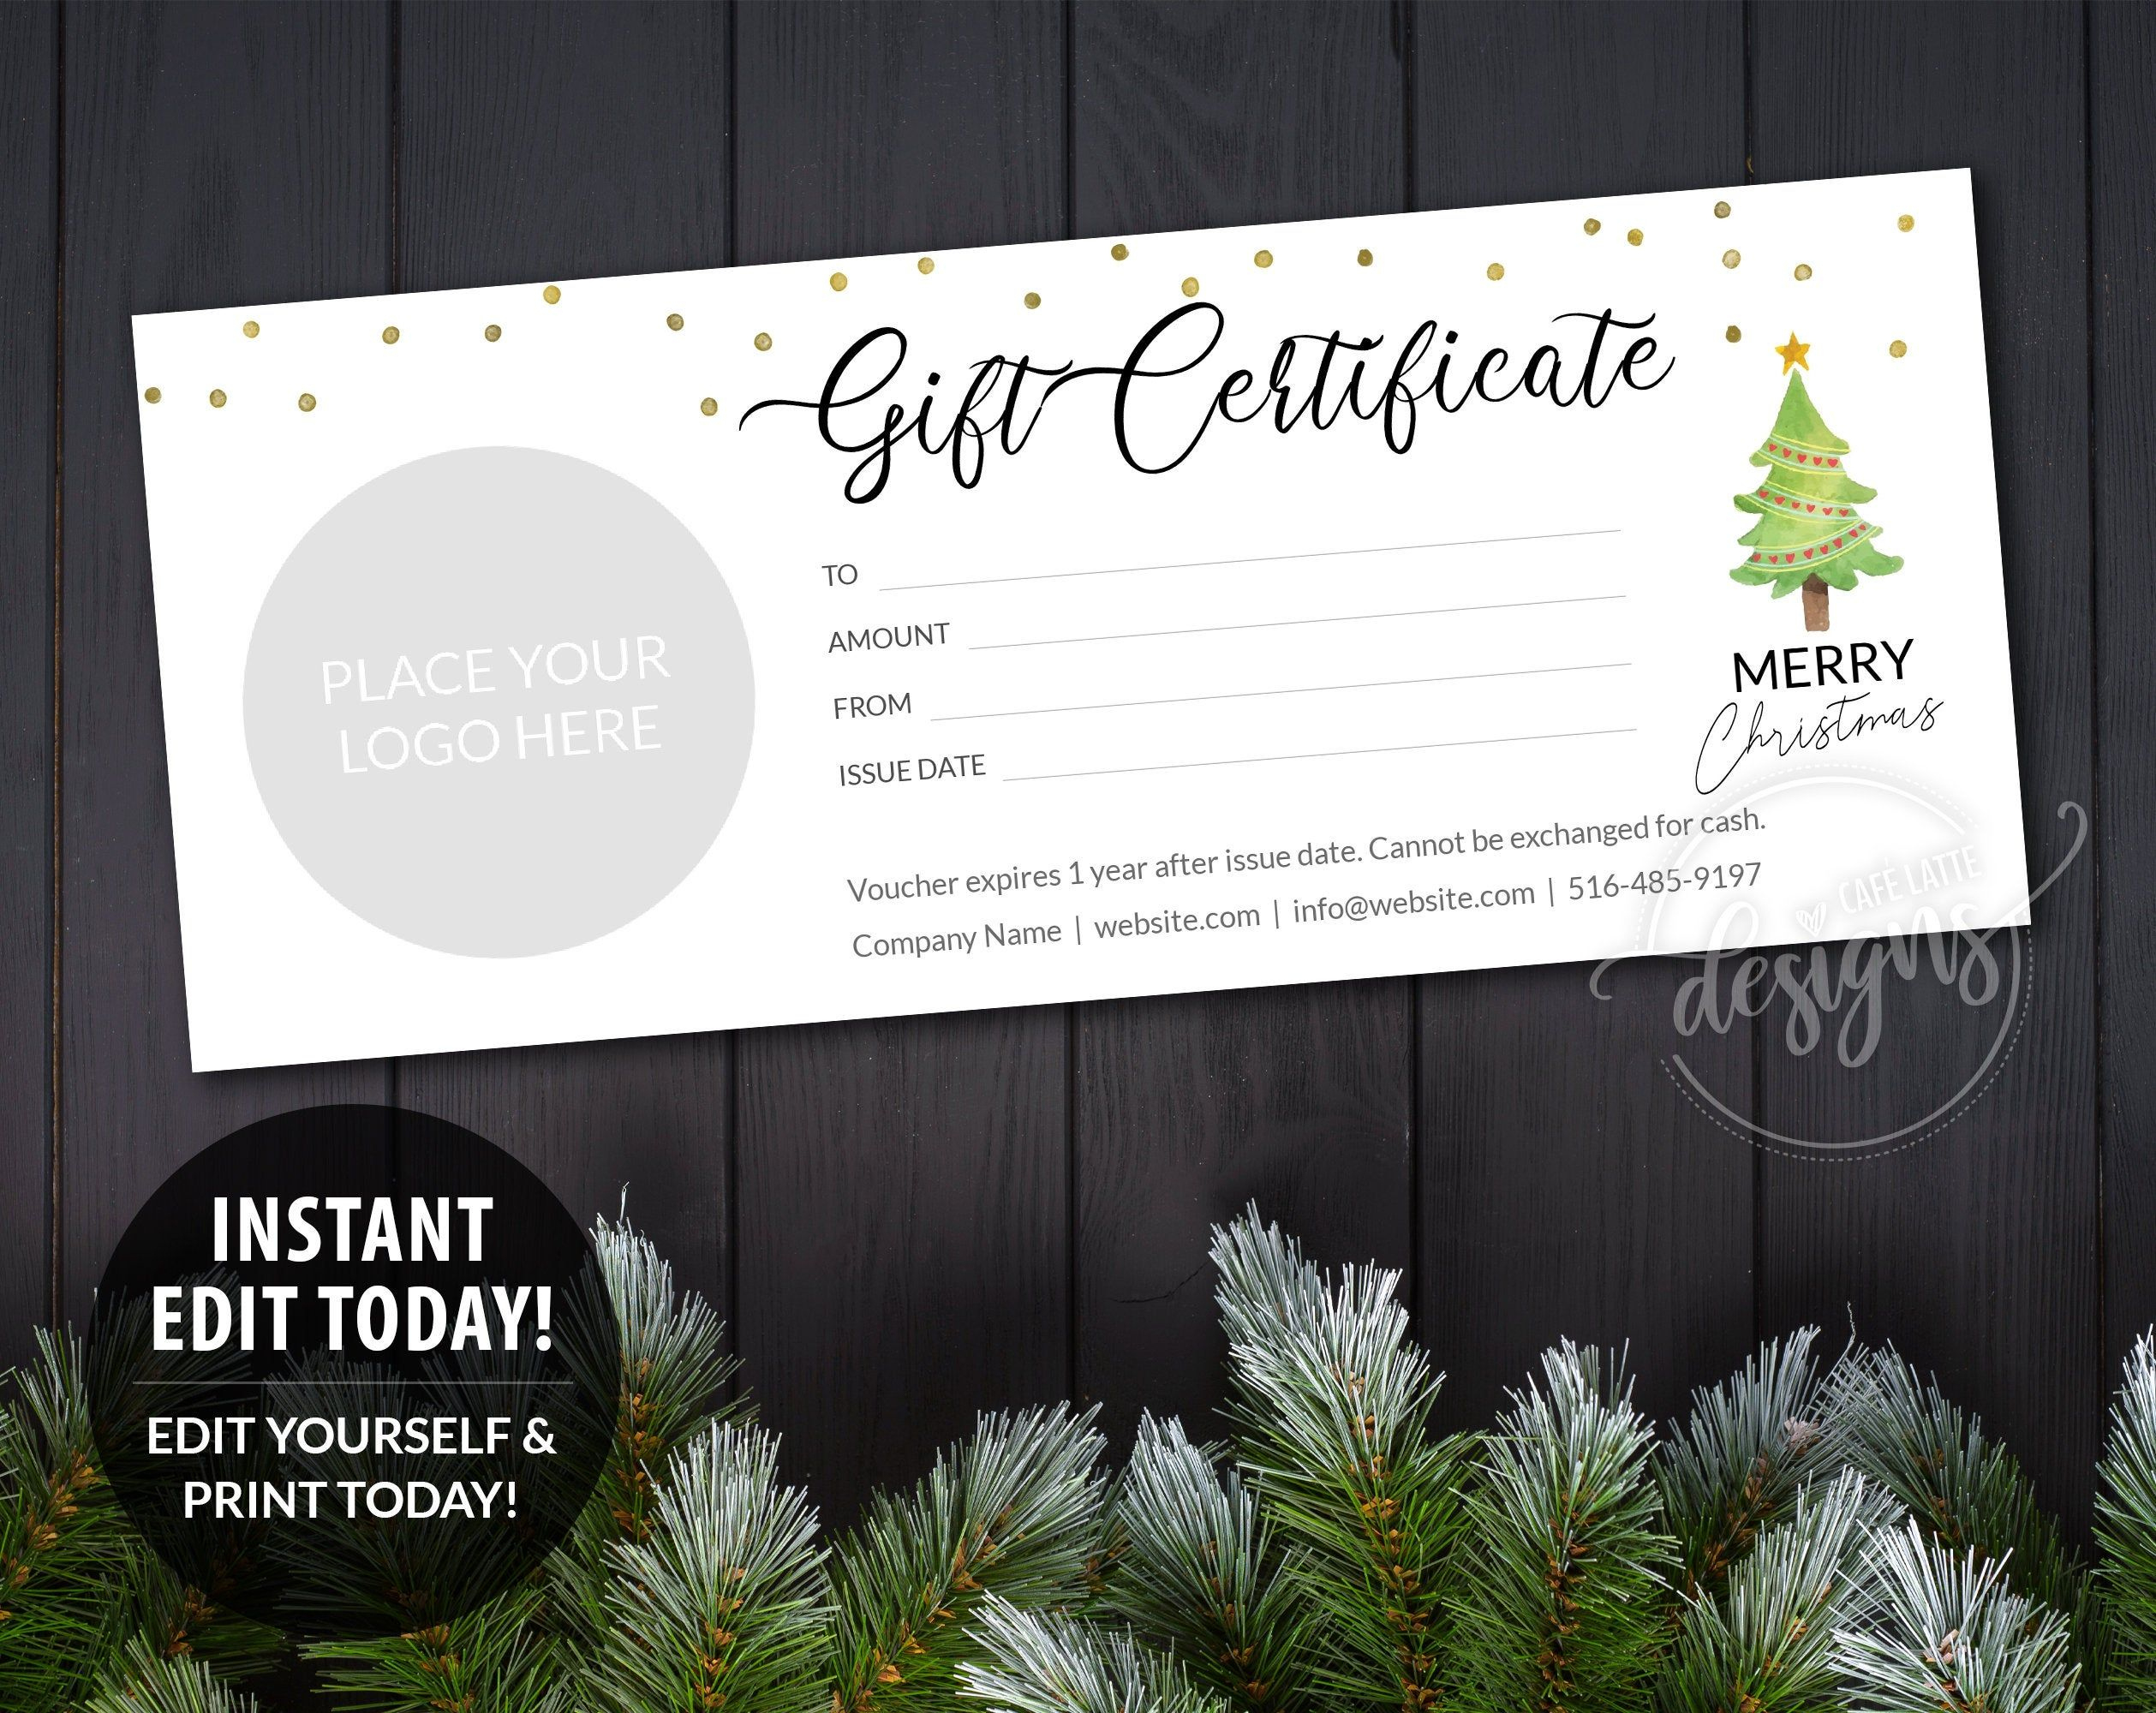 Christmas Gift Certificate Printable Editable Template | Etsy with regard to Homemade Christmas Gift Certificates Templates